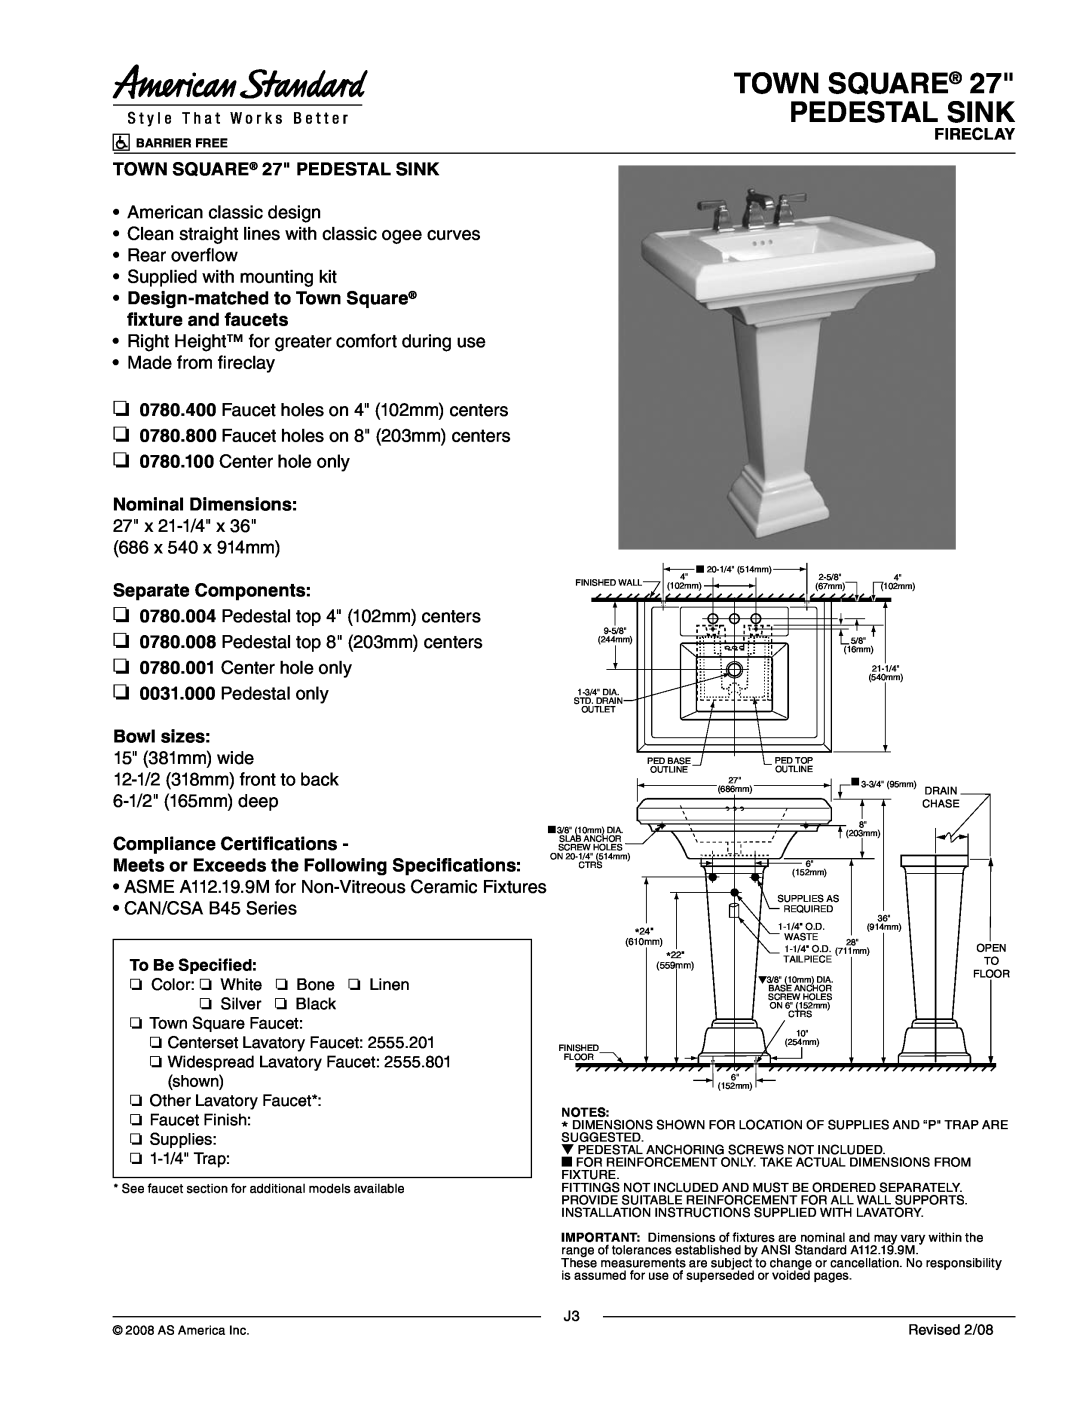 American Standard 0780.400 dimensions Town Square Pedestal Sink, TOWN SQUARE 27 PEDESTAL SINK, Separate Components 